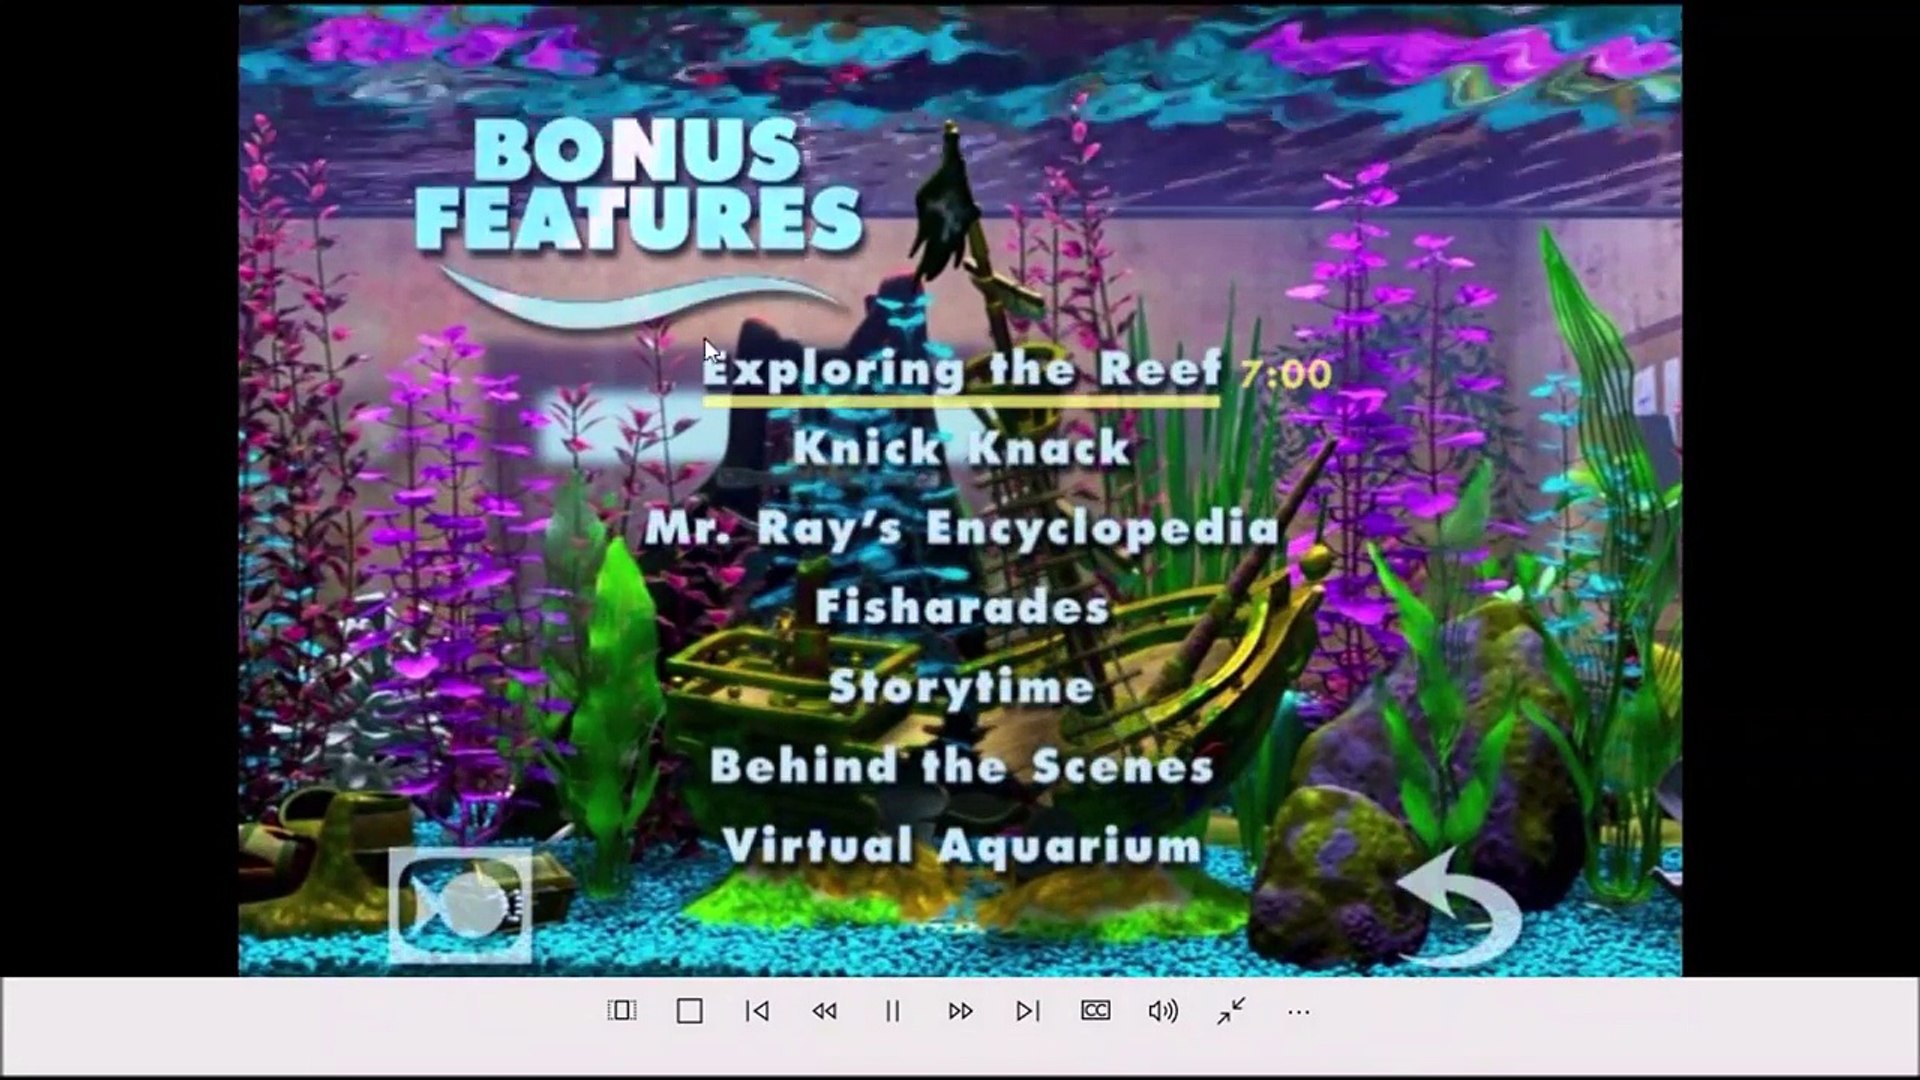 Finding Nemo 2003 DVD Menu Walkthrough (Disc 2) - video Dailymotion